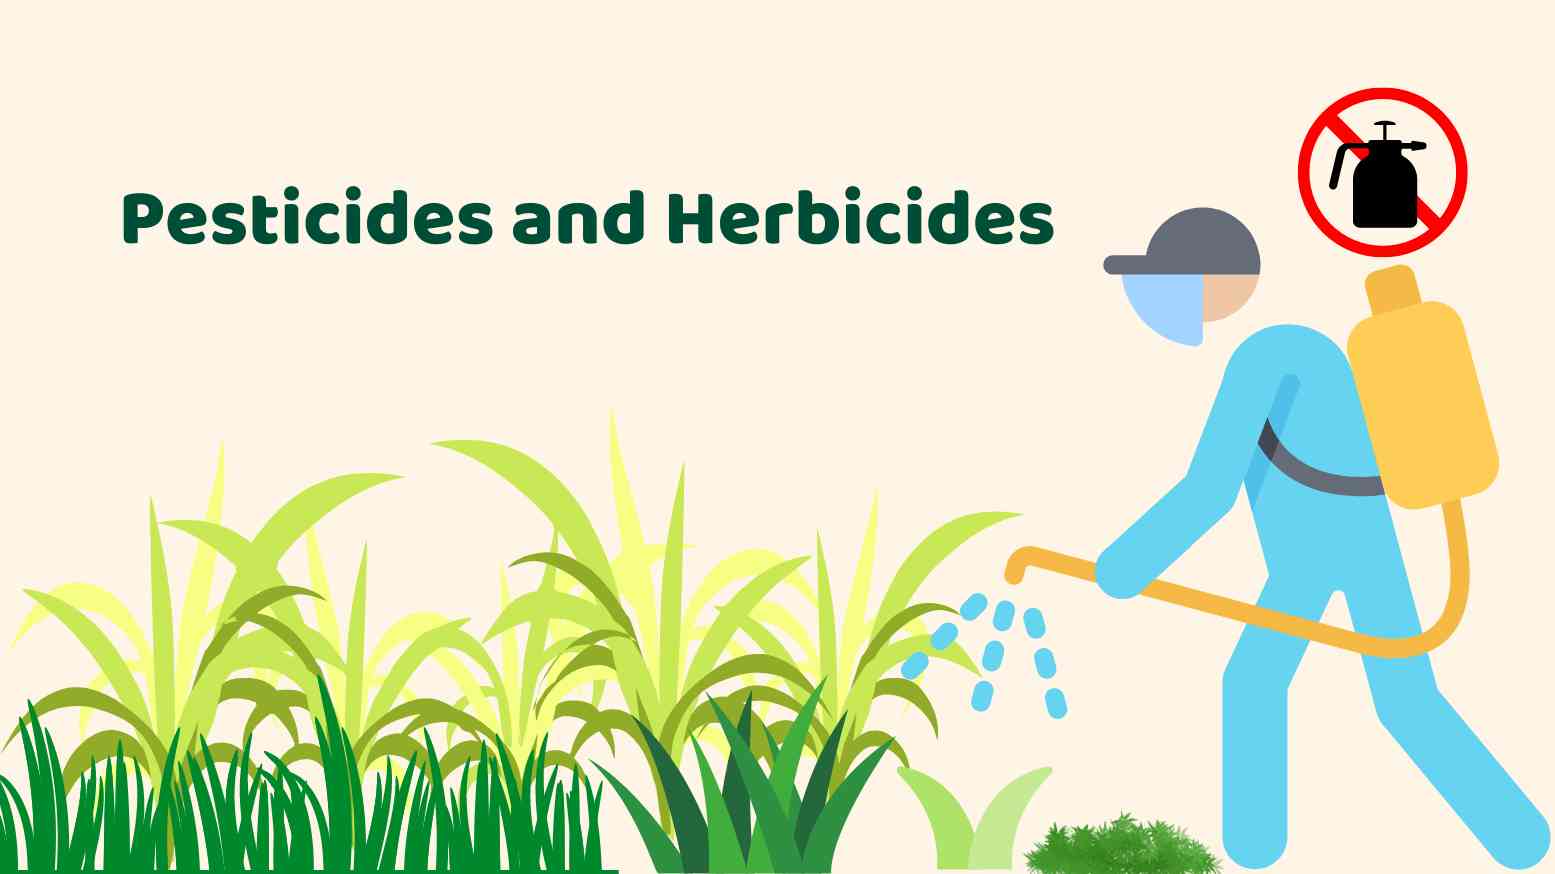 Pesticides and Herbicides